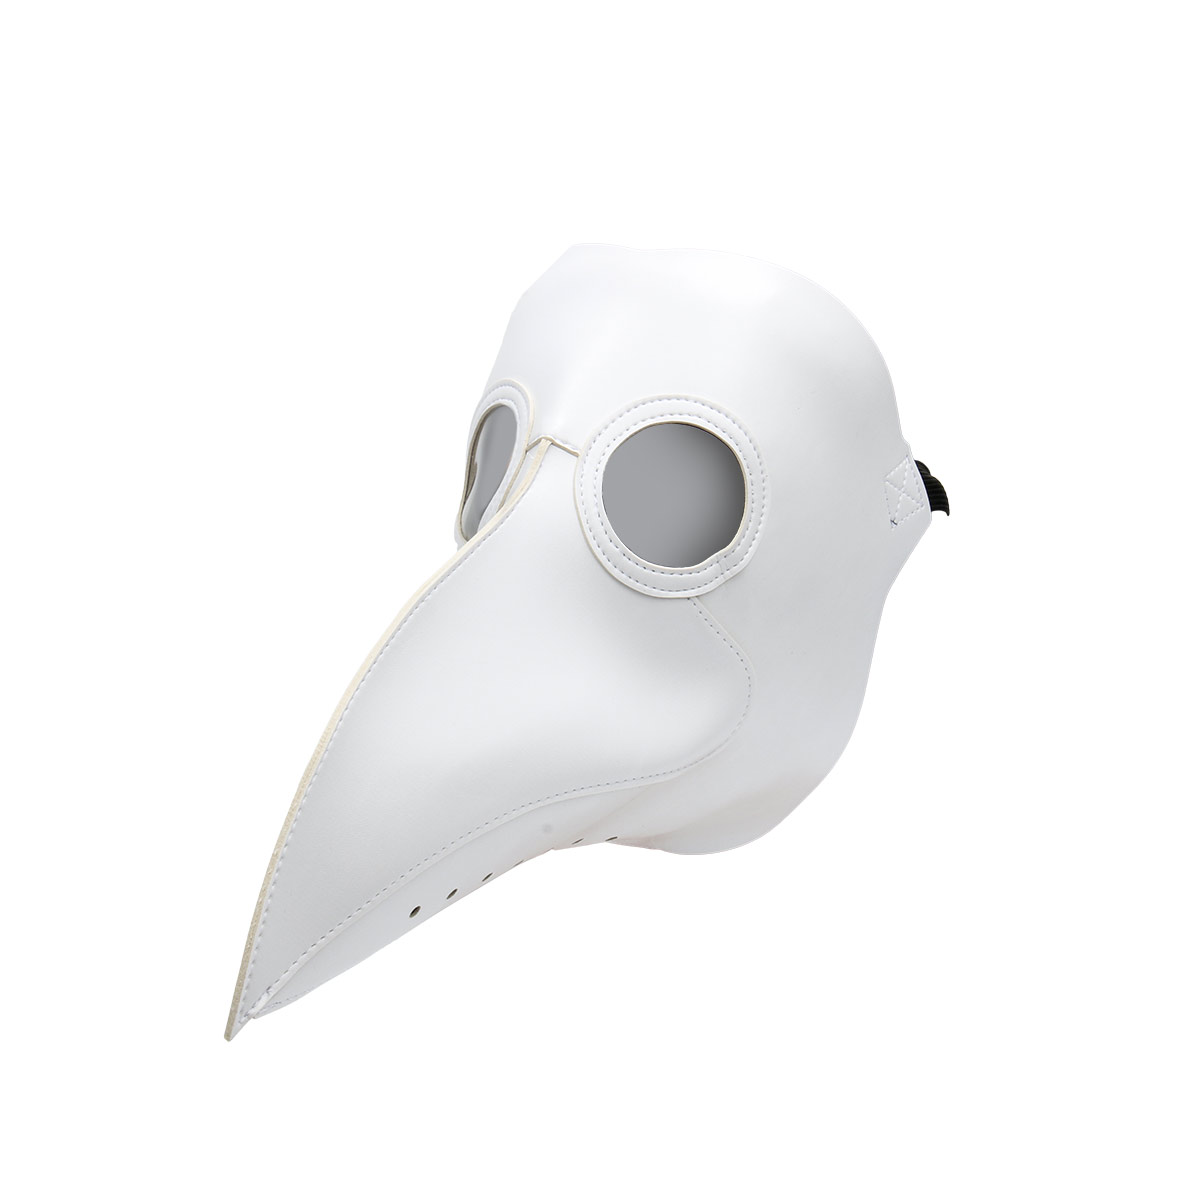 Birds Beak Masks Cospaly Dr. Beulenpest Steampunk Plague Doctor Schnabel Mask In Stock